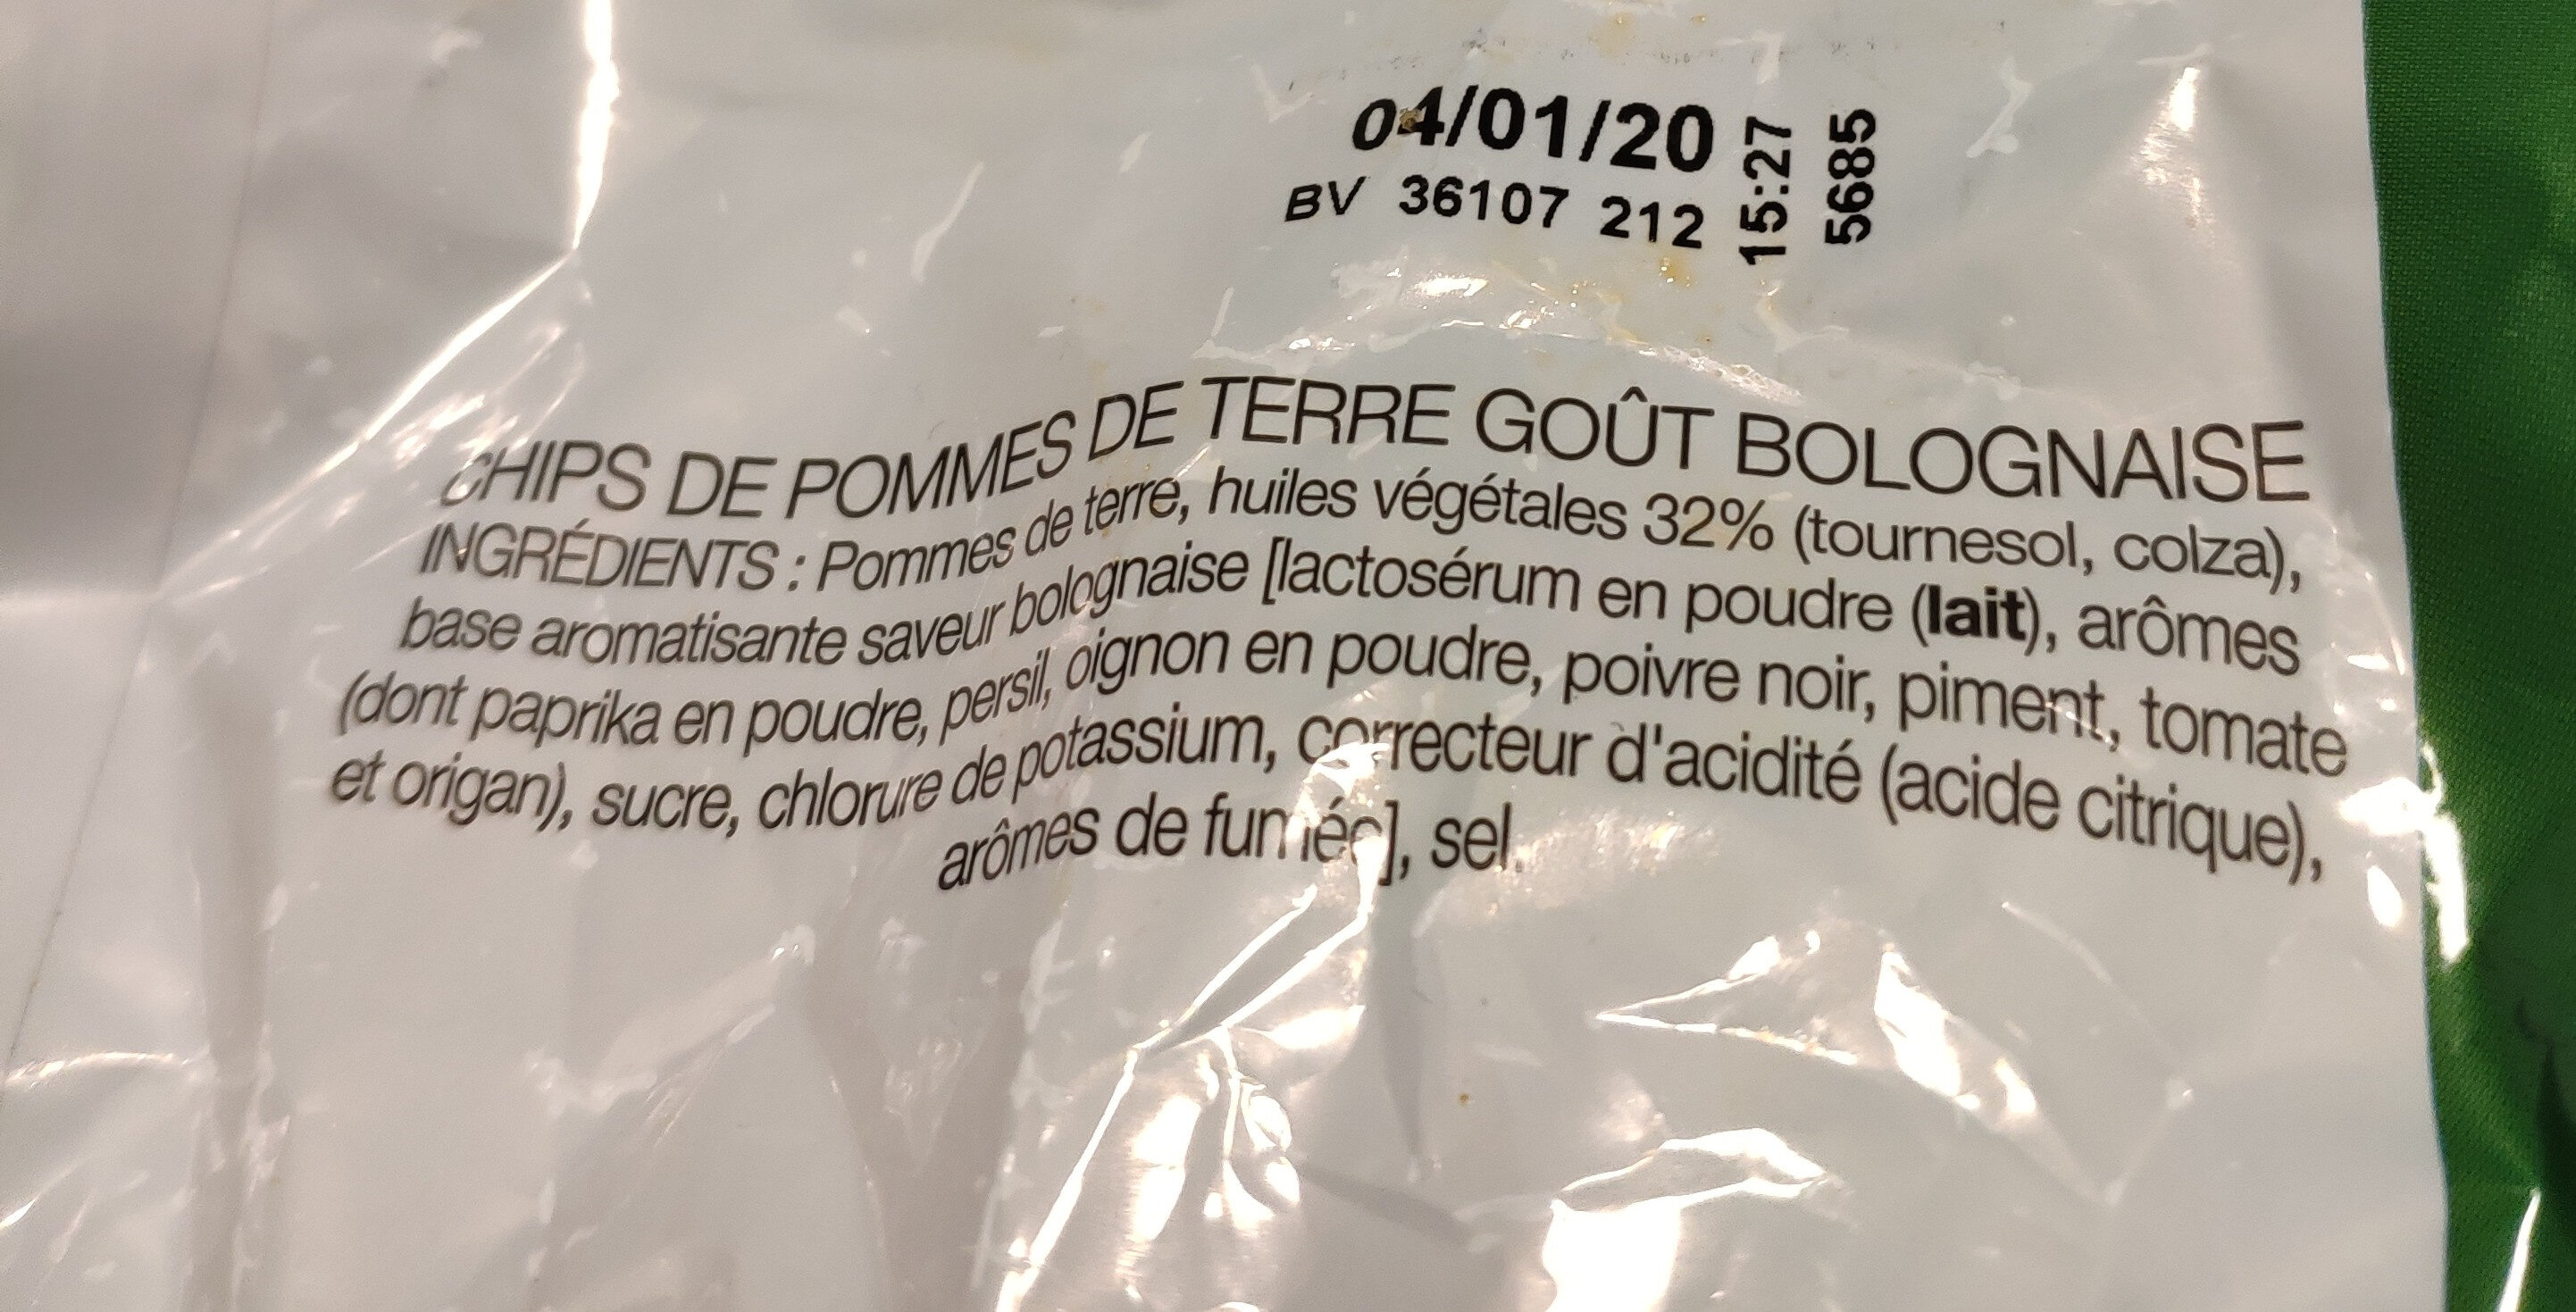 Chips saveur bolognaise - Ingrediënten - fr